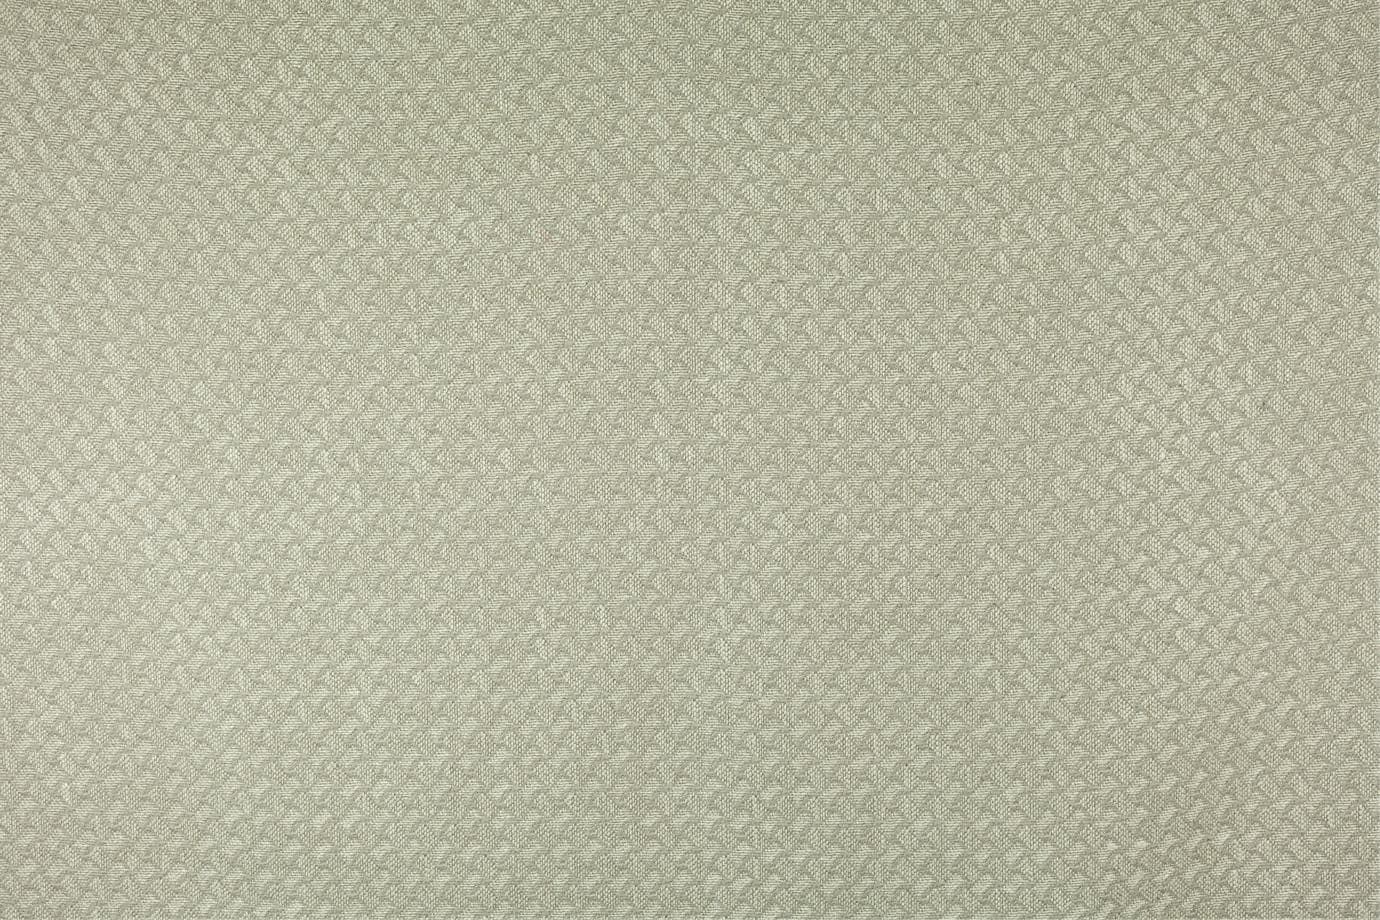 J1594 MEO PATACCA 002 Sabbia home decoration fabric